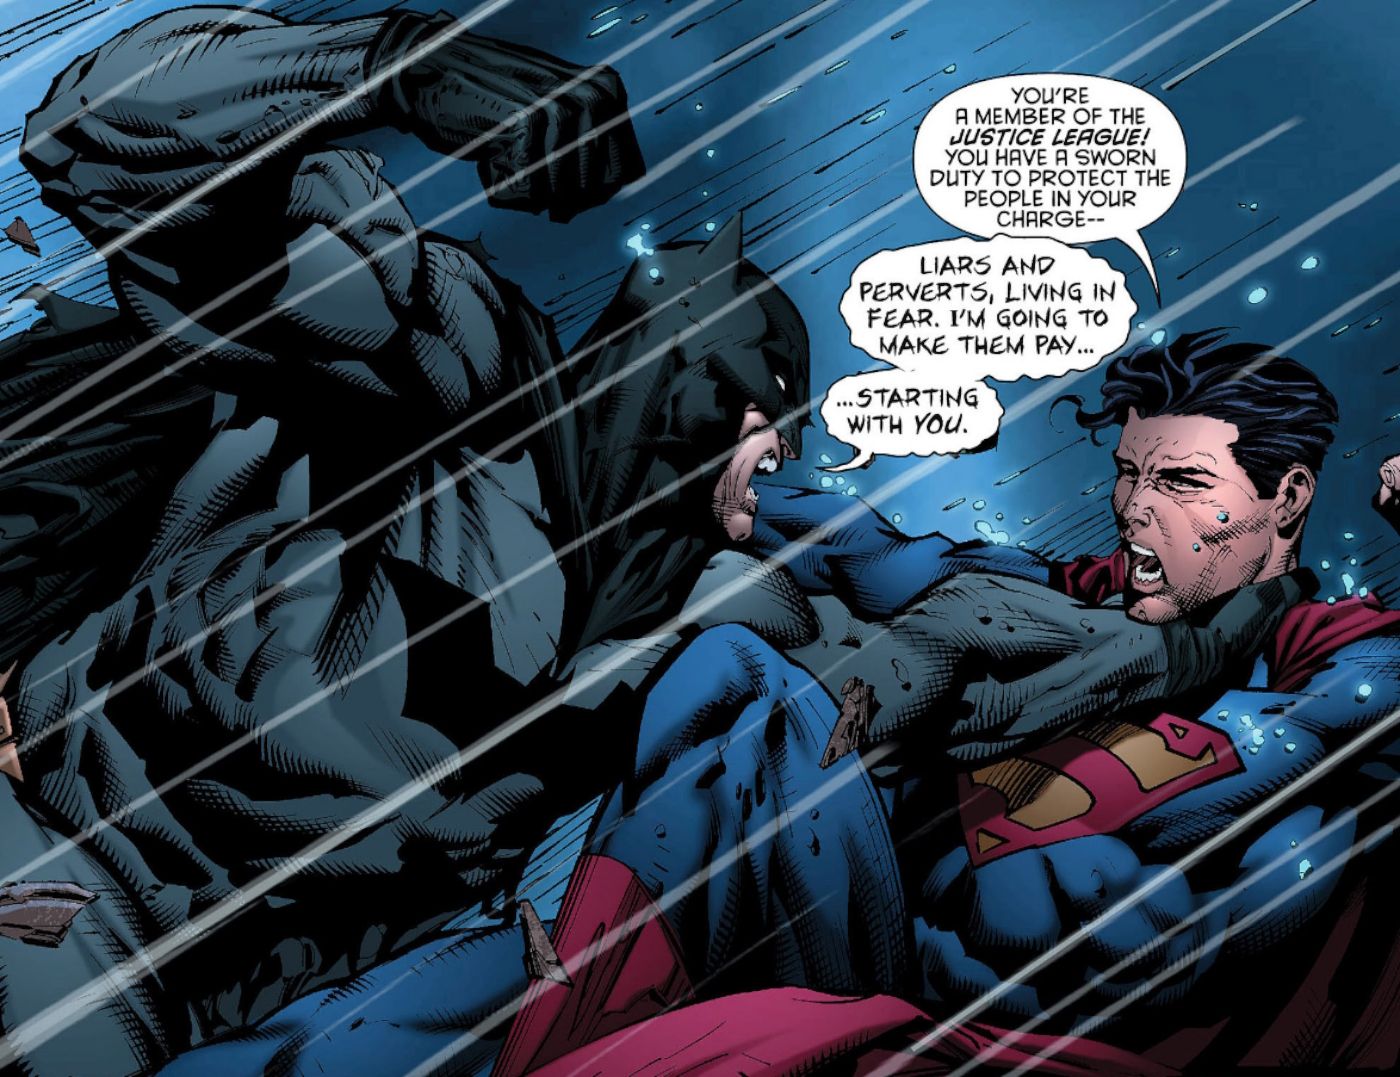 Comic book panel: Batman Attacks Superman While On Drugs